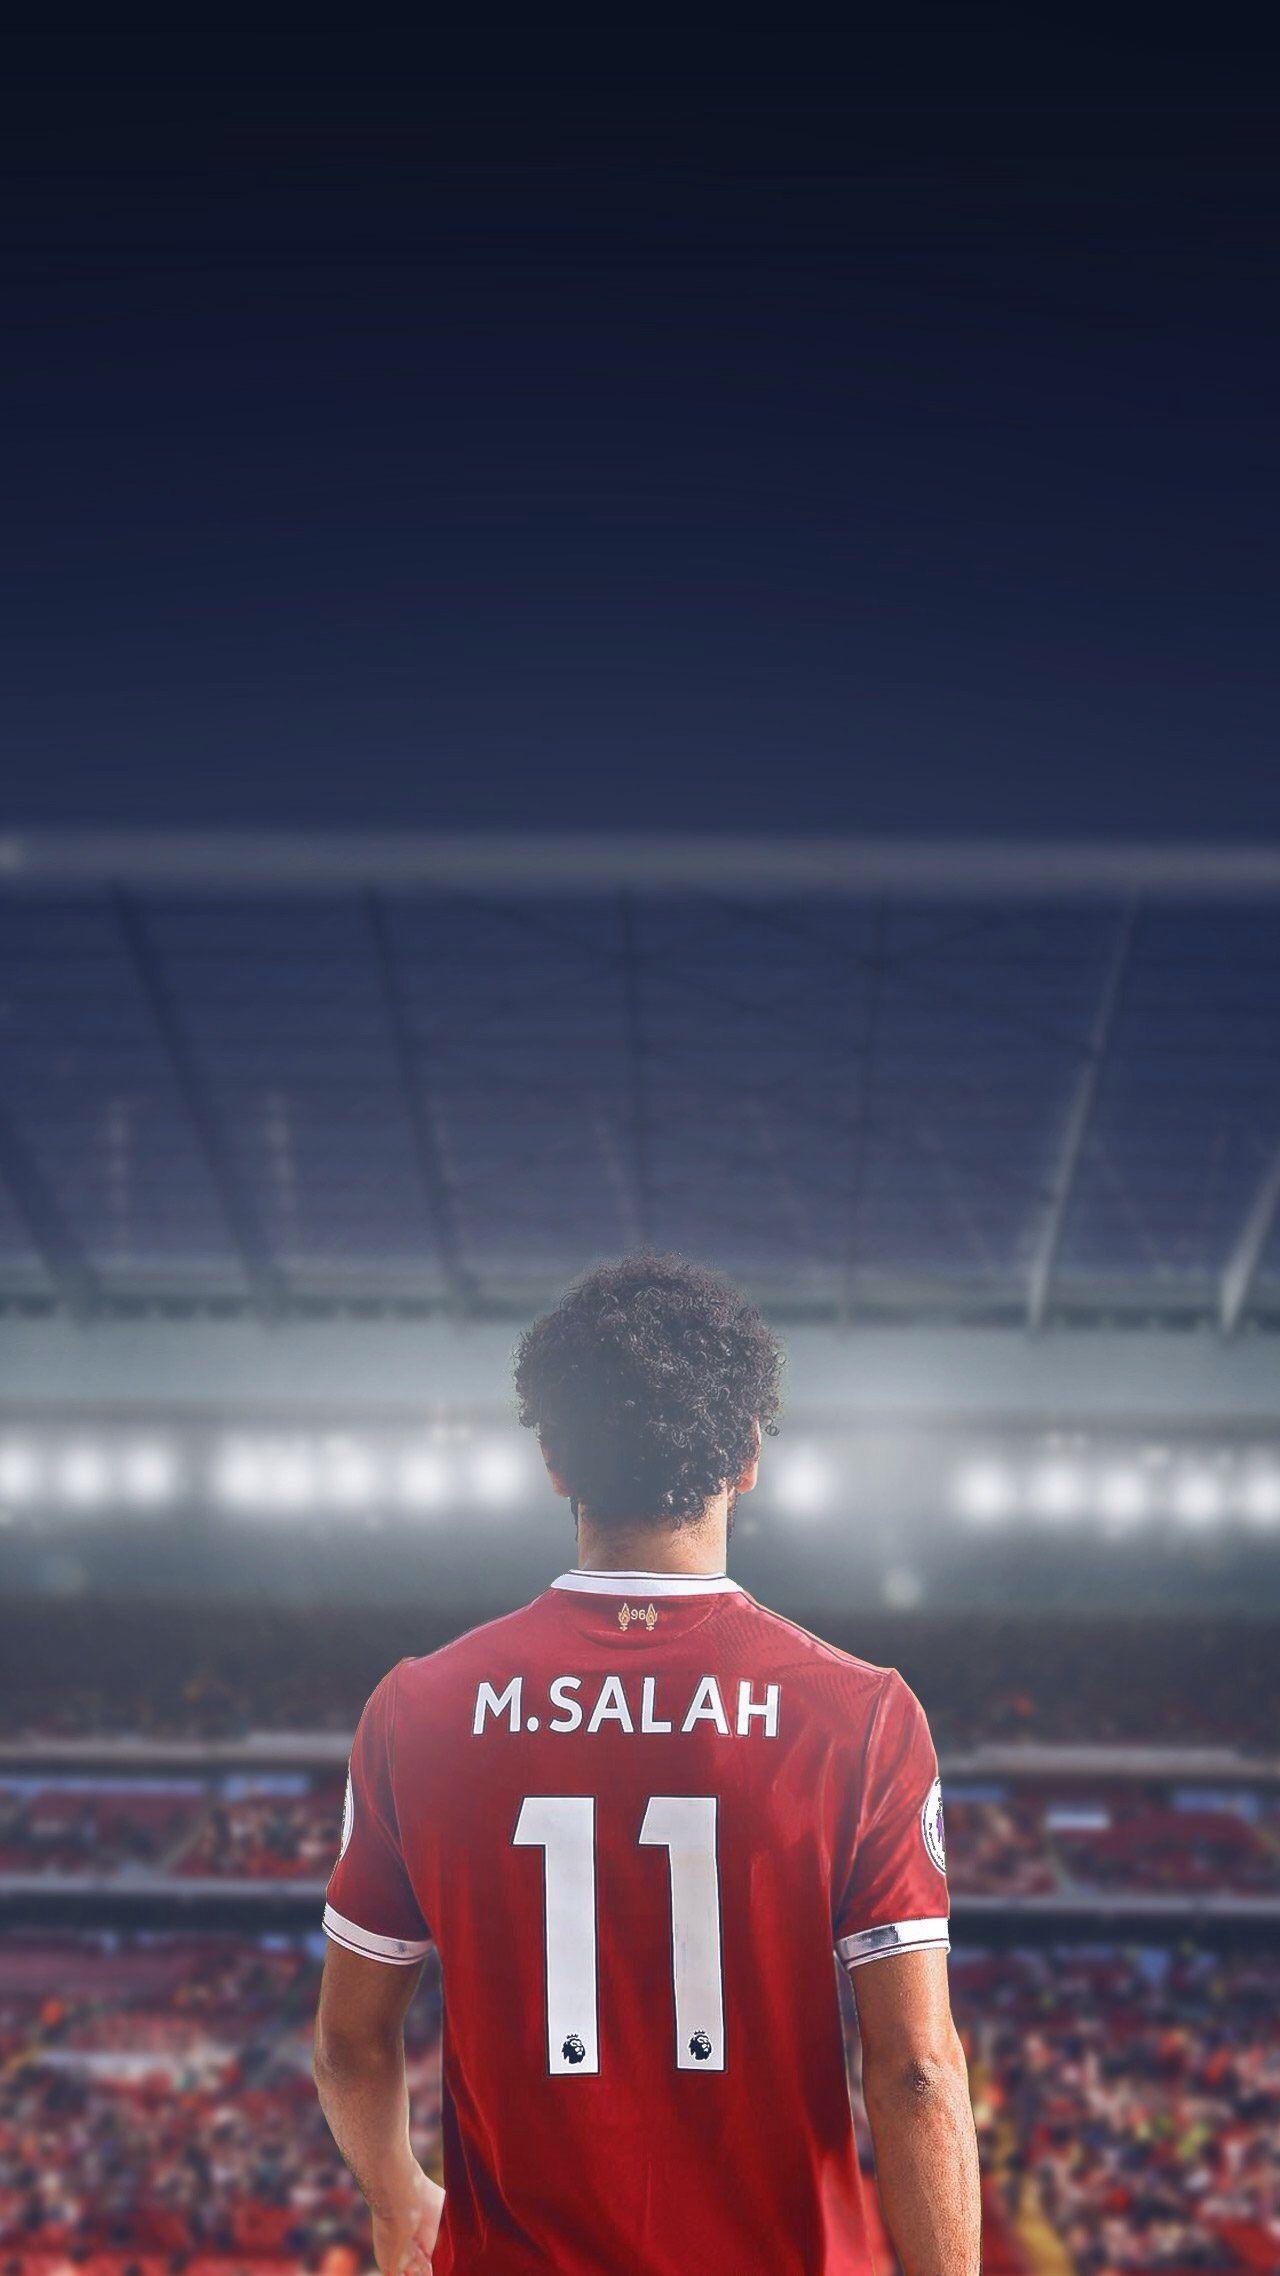 Fredrik on Twitter  Mohamed Salah wallpaper LFC MoSalah  httpstcoWEFUnZG378  Twitter